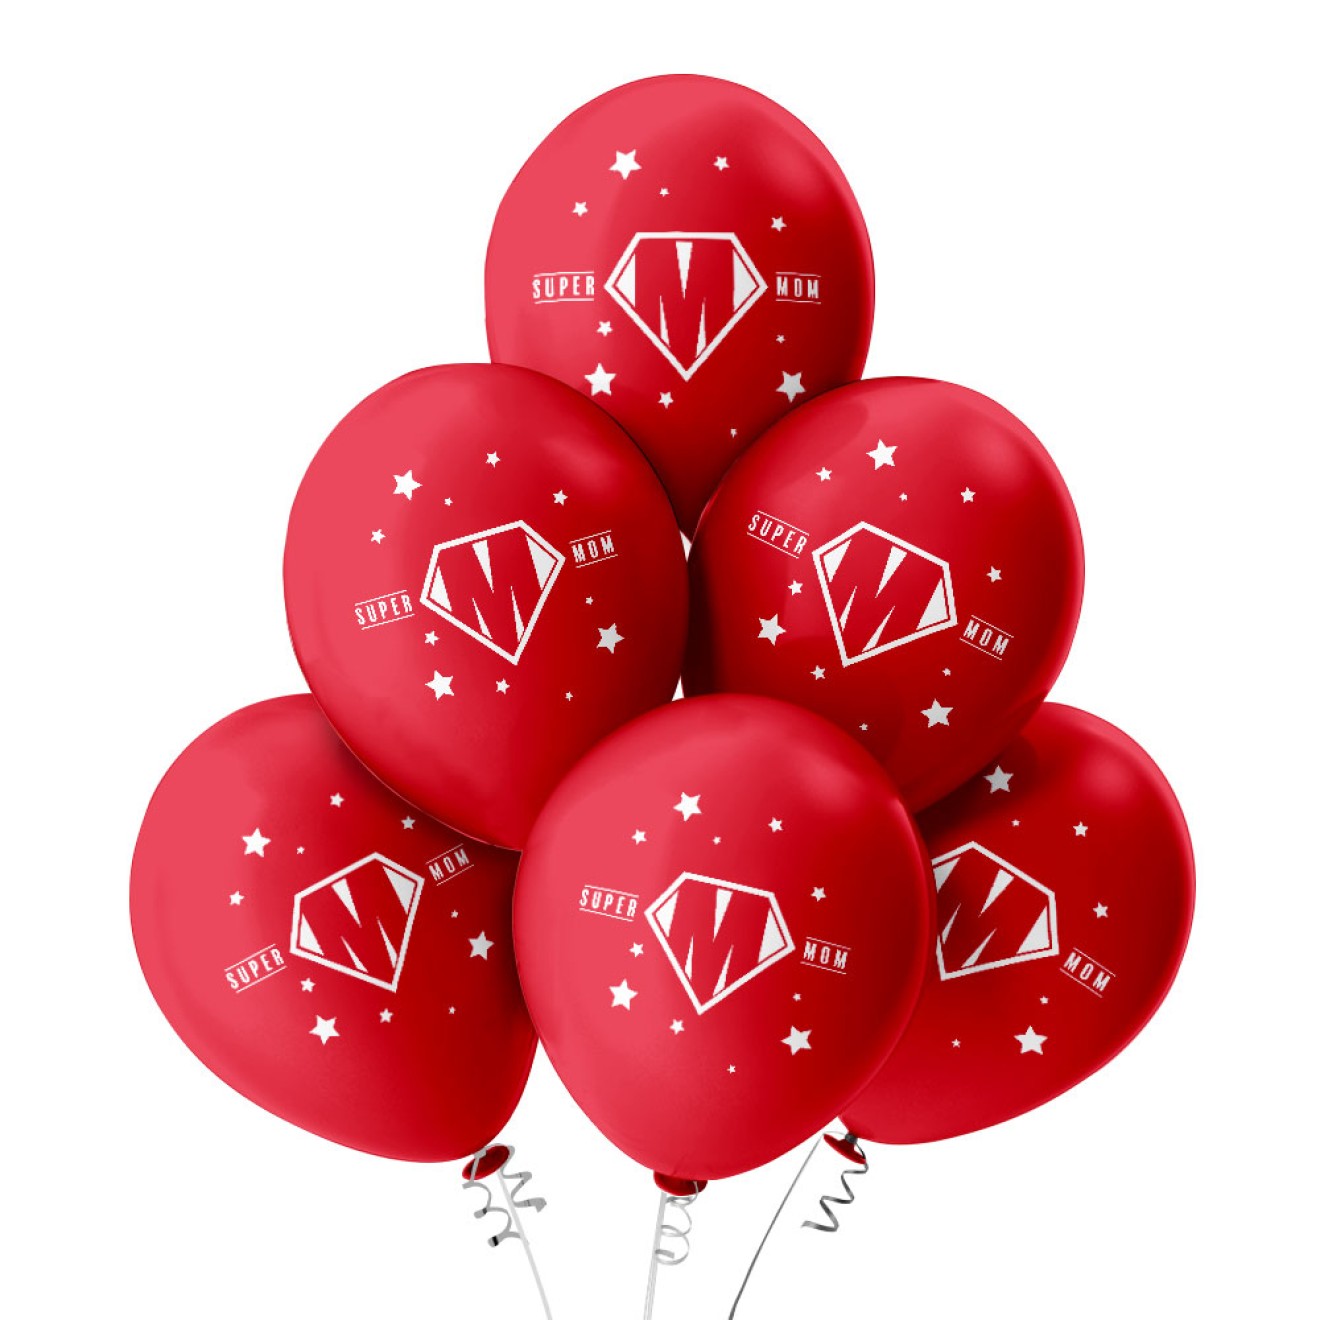 6 Luftballons Super-Mom - Rot